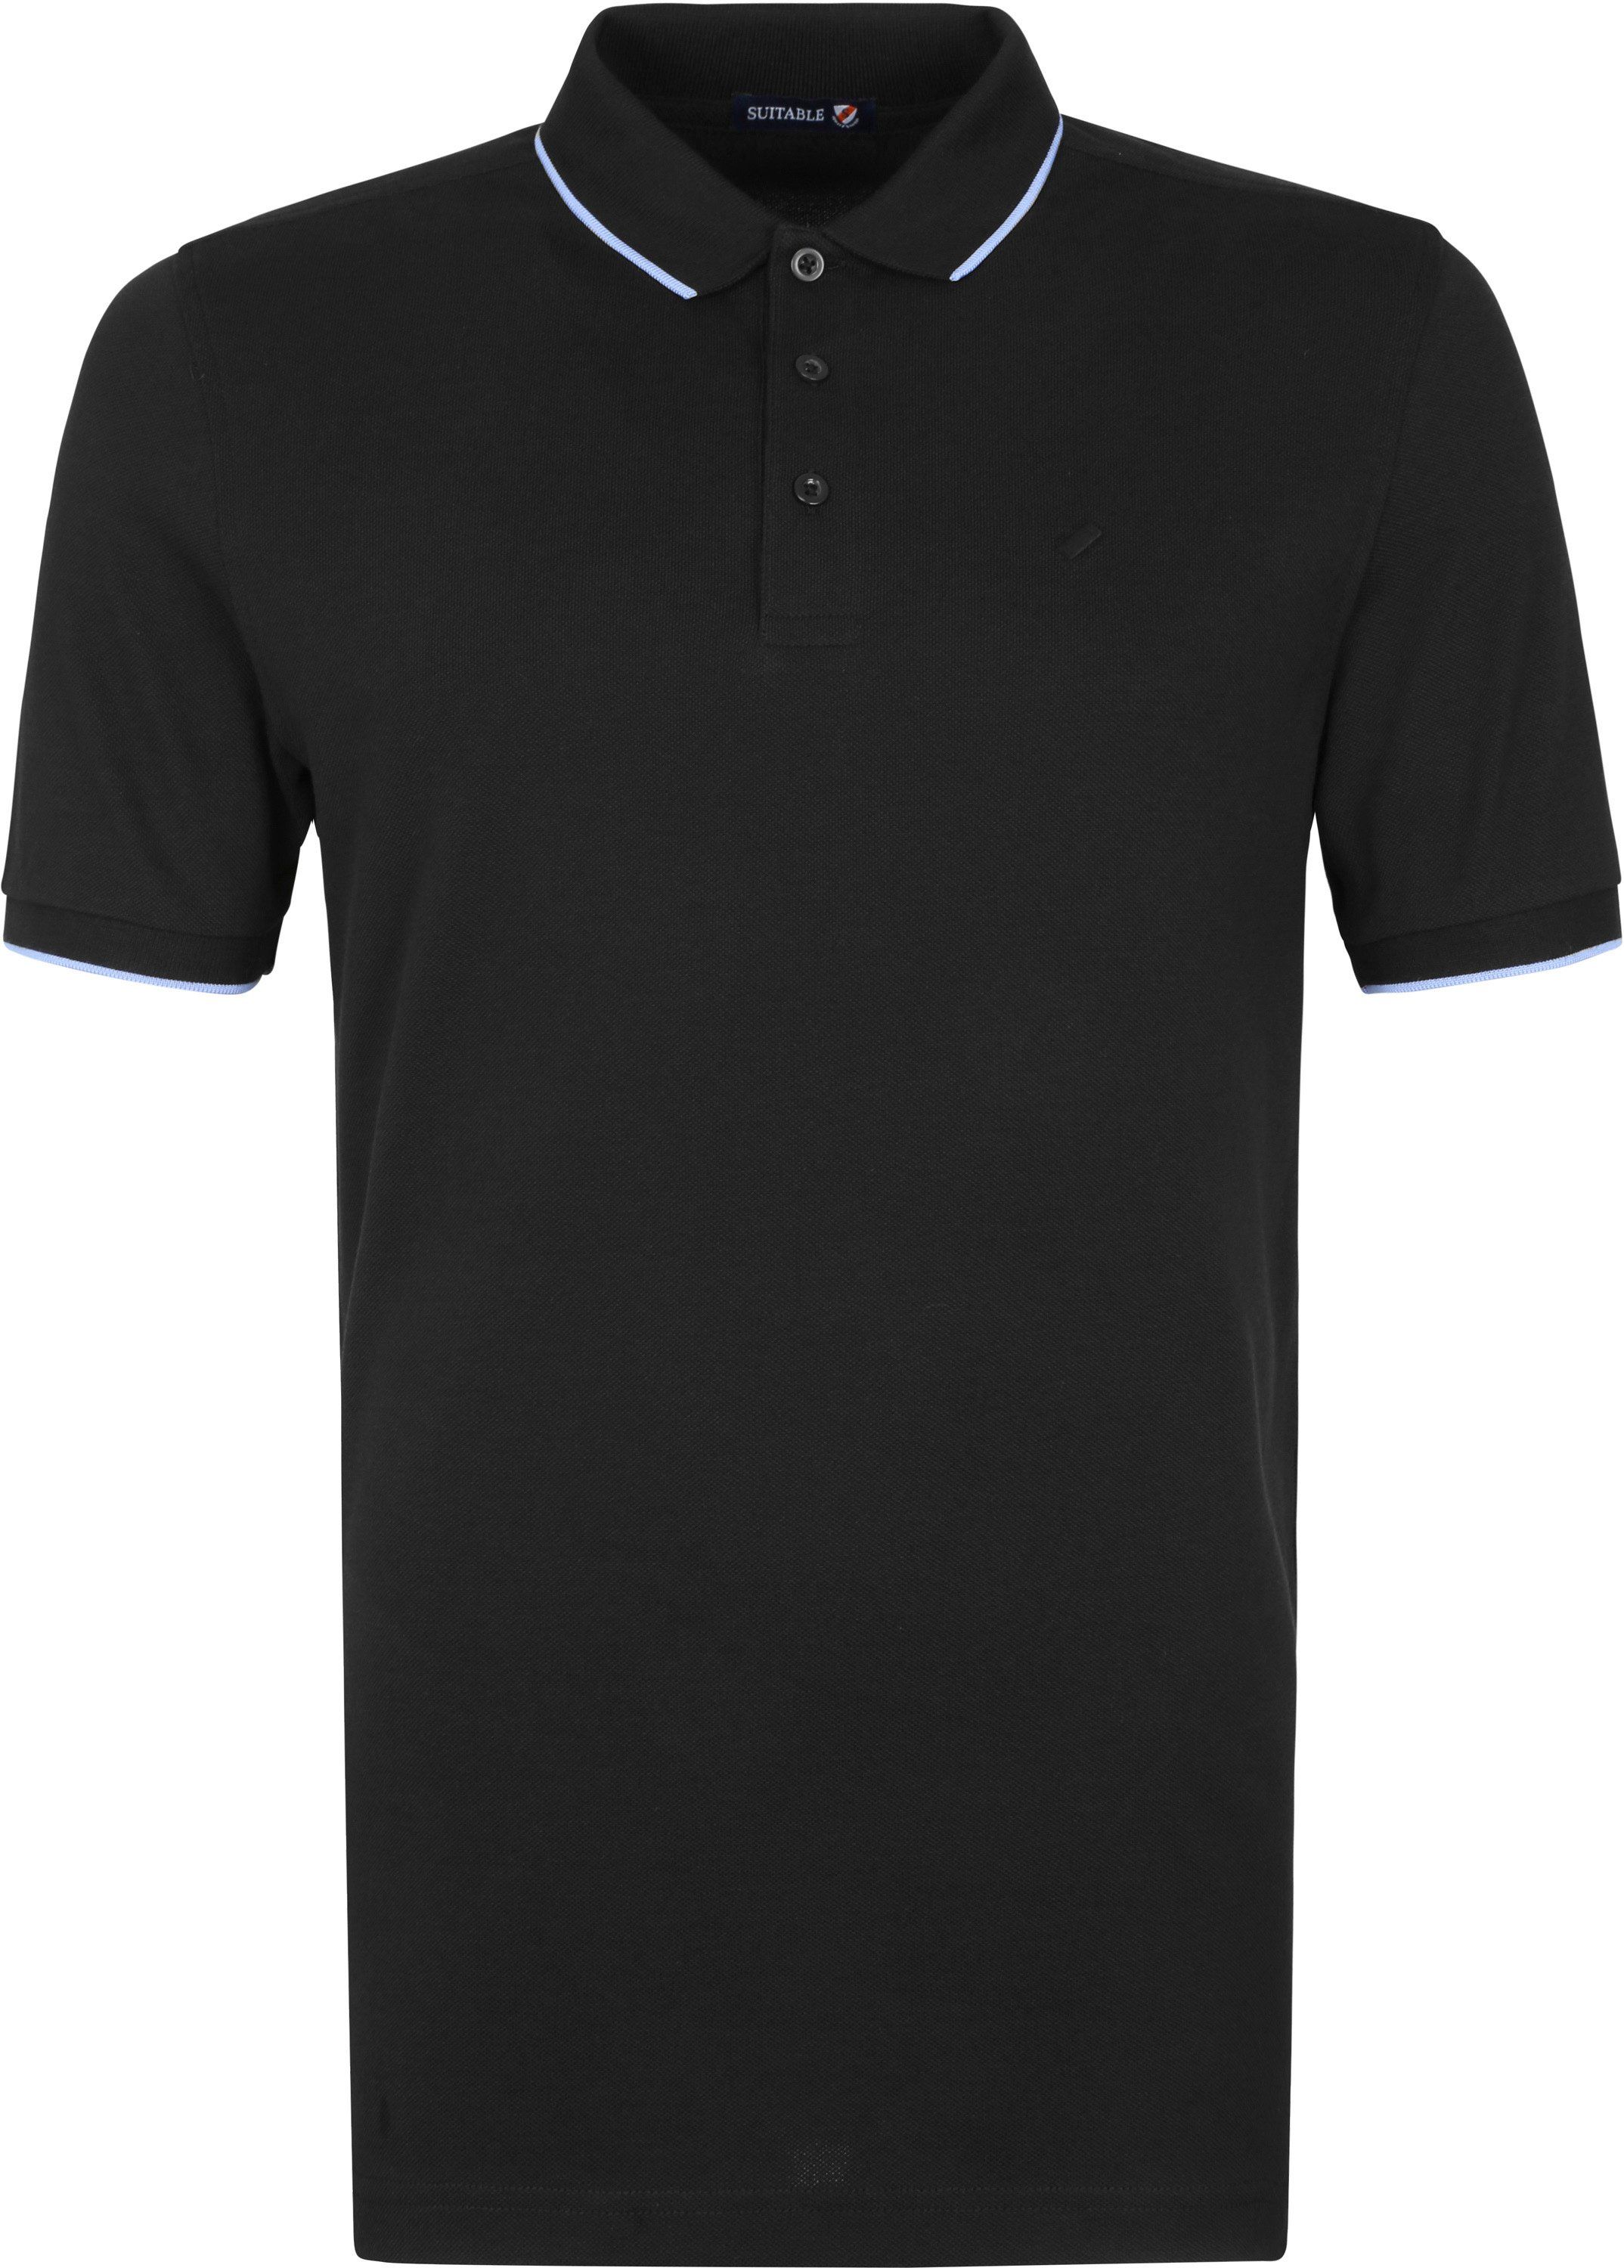 Suitable Poloshirt Tip Ferry Black size 3XL